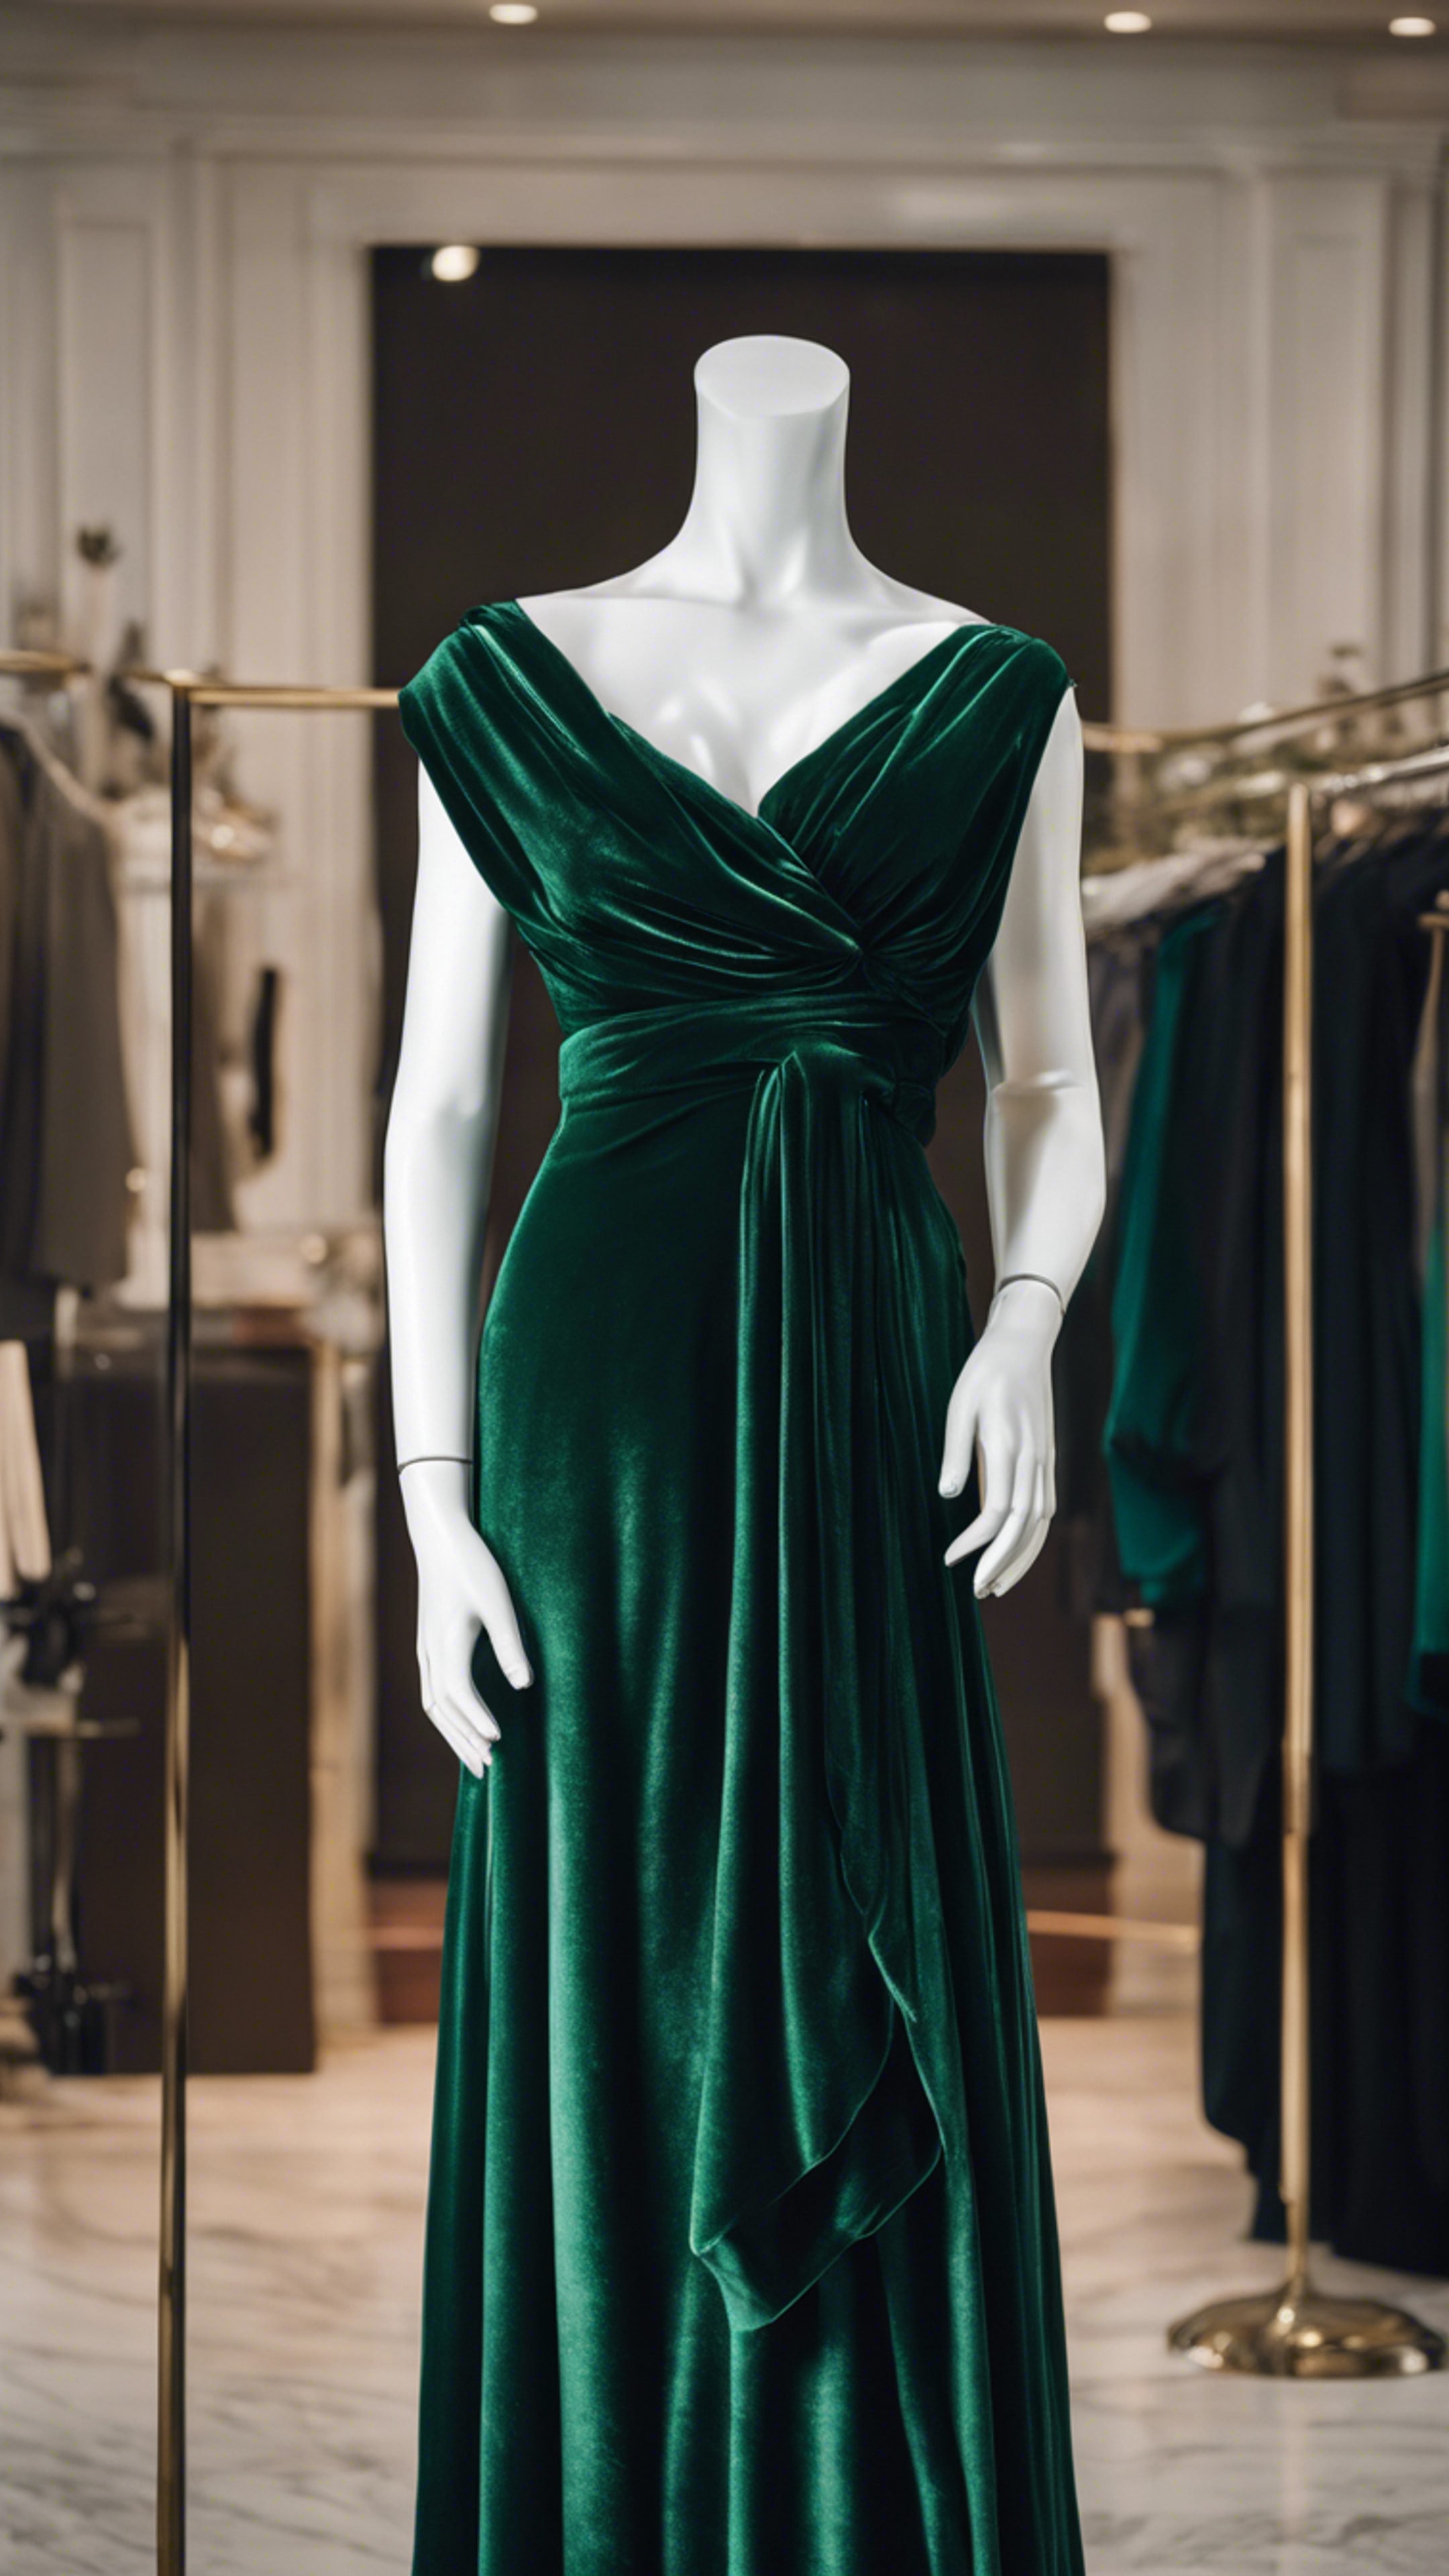 A classy dark green velvet dress draped on a mannequin. Tapetai[4958bfaa75d040bb9909]